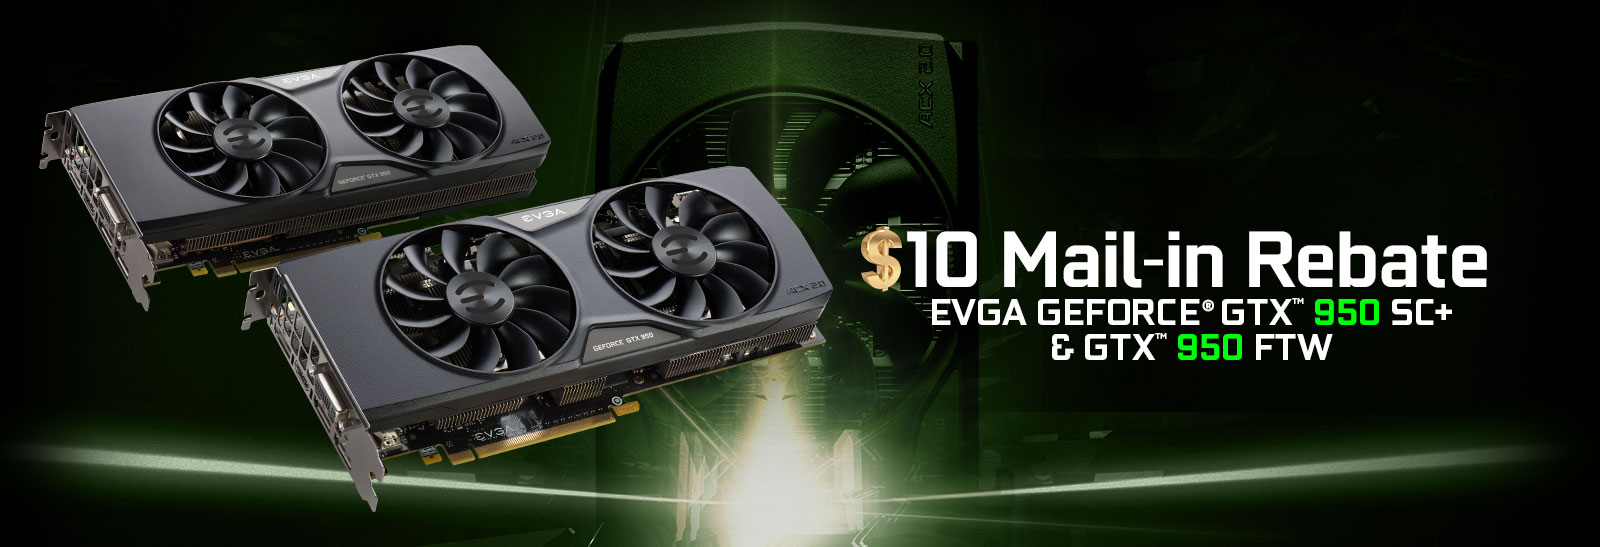 EVGA GeForce GTX 950 - $10 Mail-in Rebate